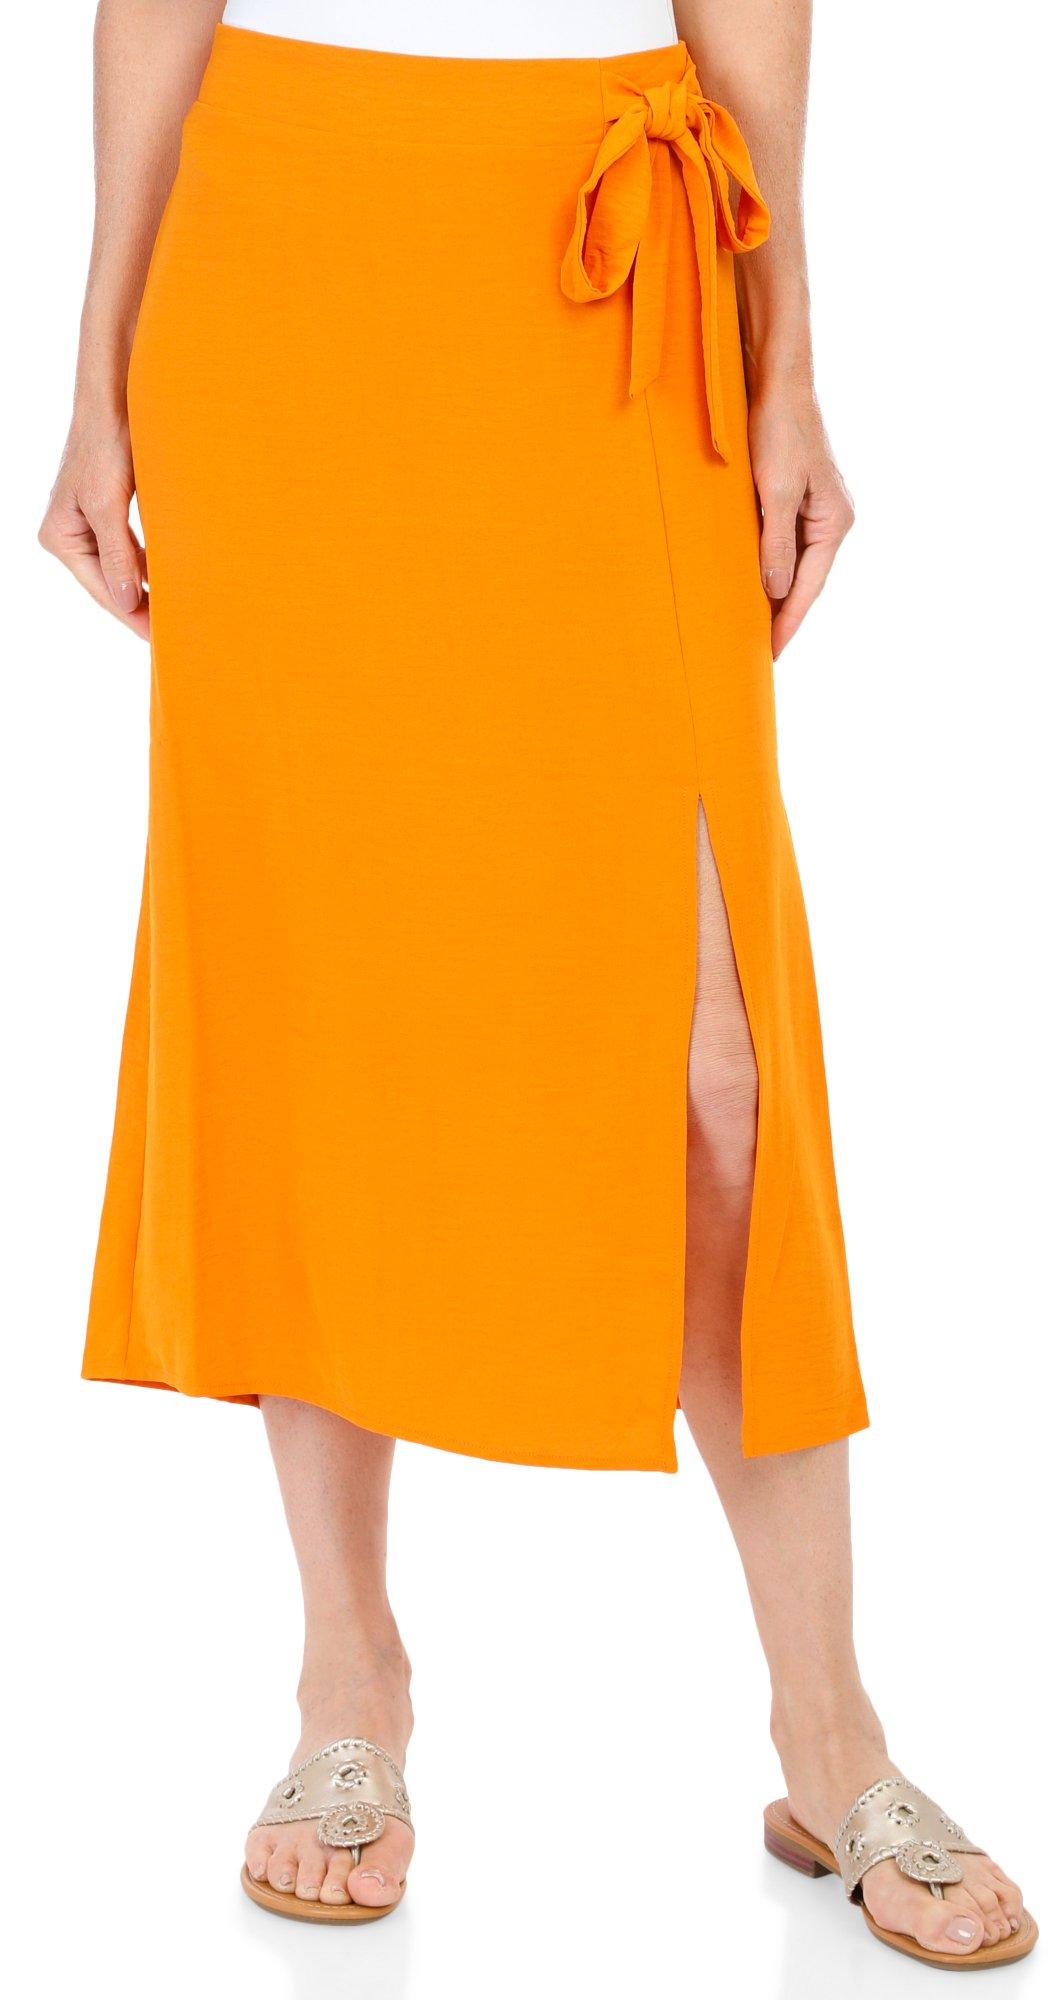 Women's Solid Maxi Skirt